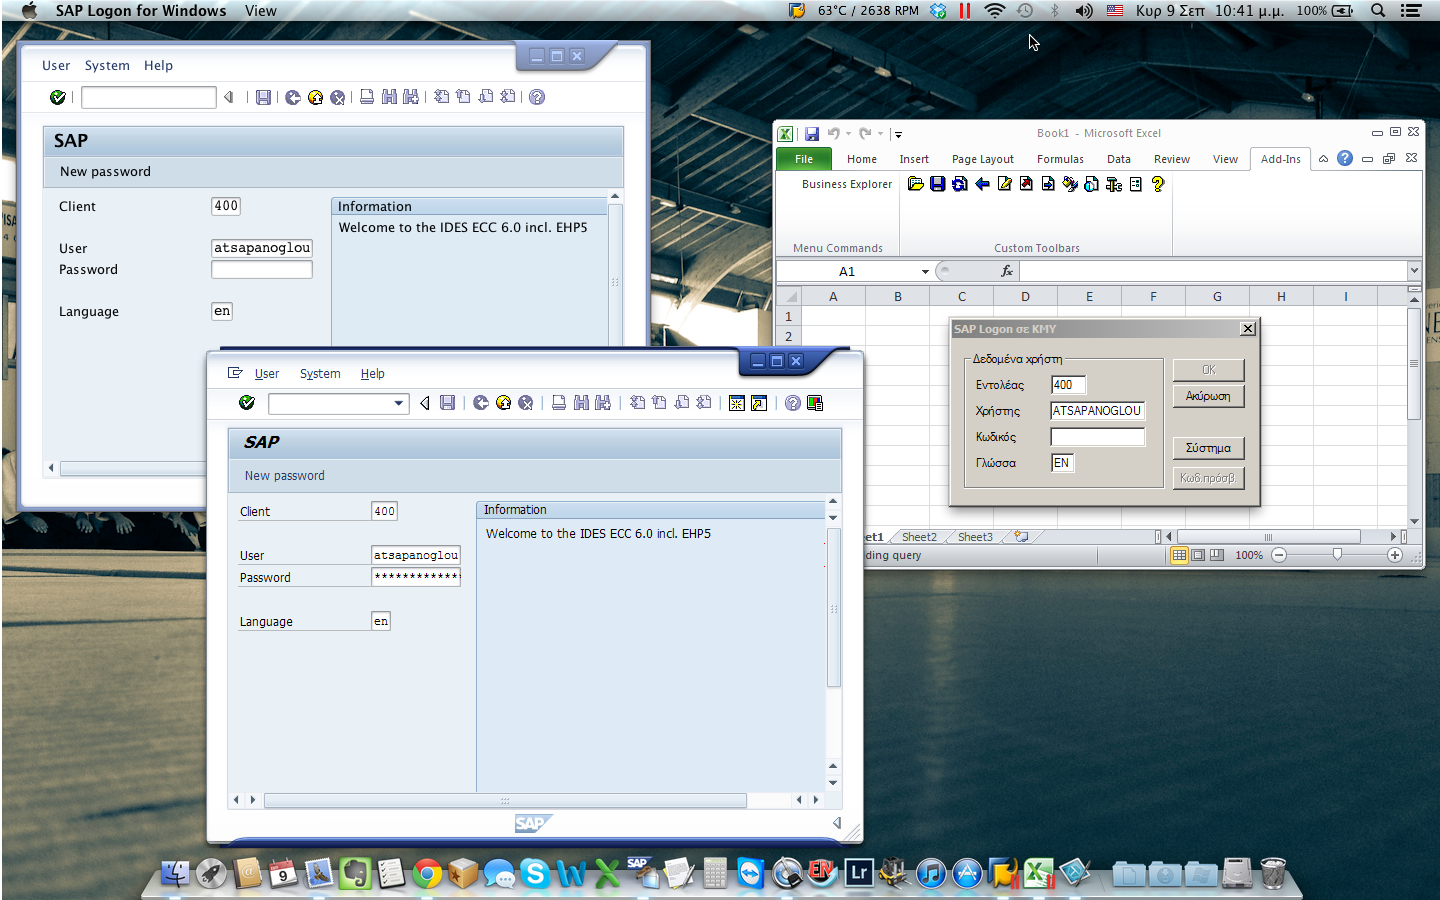 SAP GUI 7.50 Installation on macOS